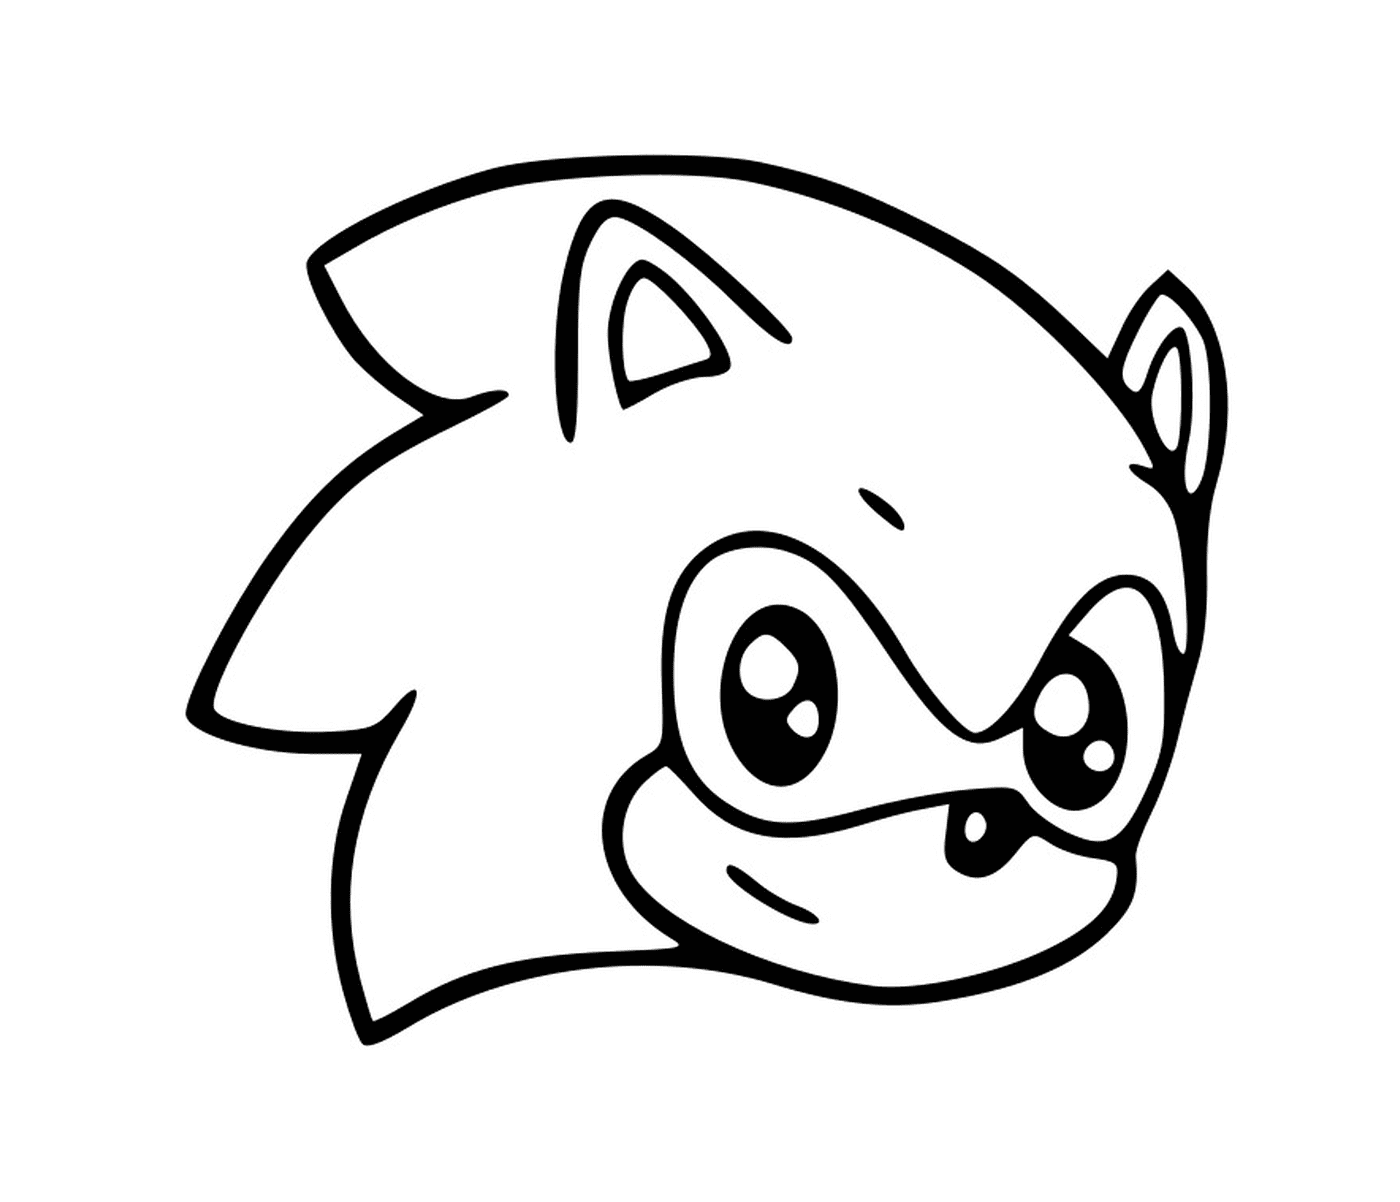  Sonic the hedgehog 